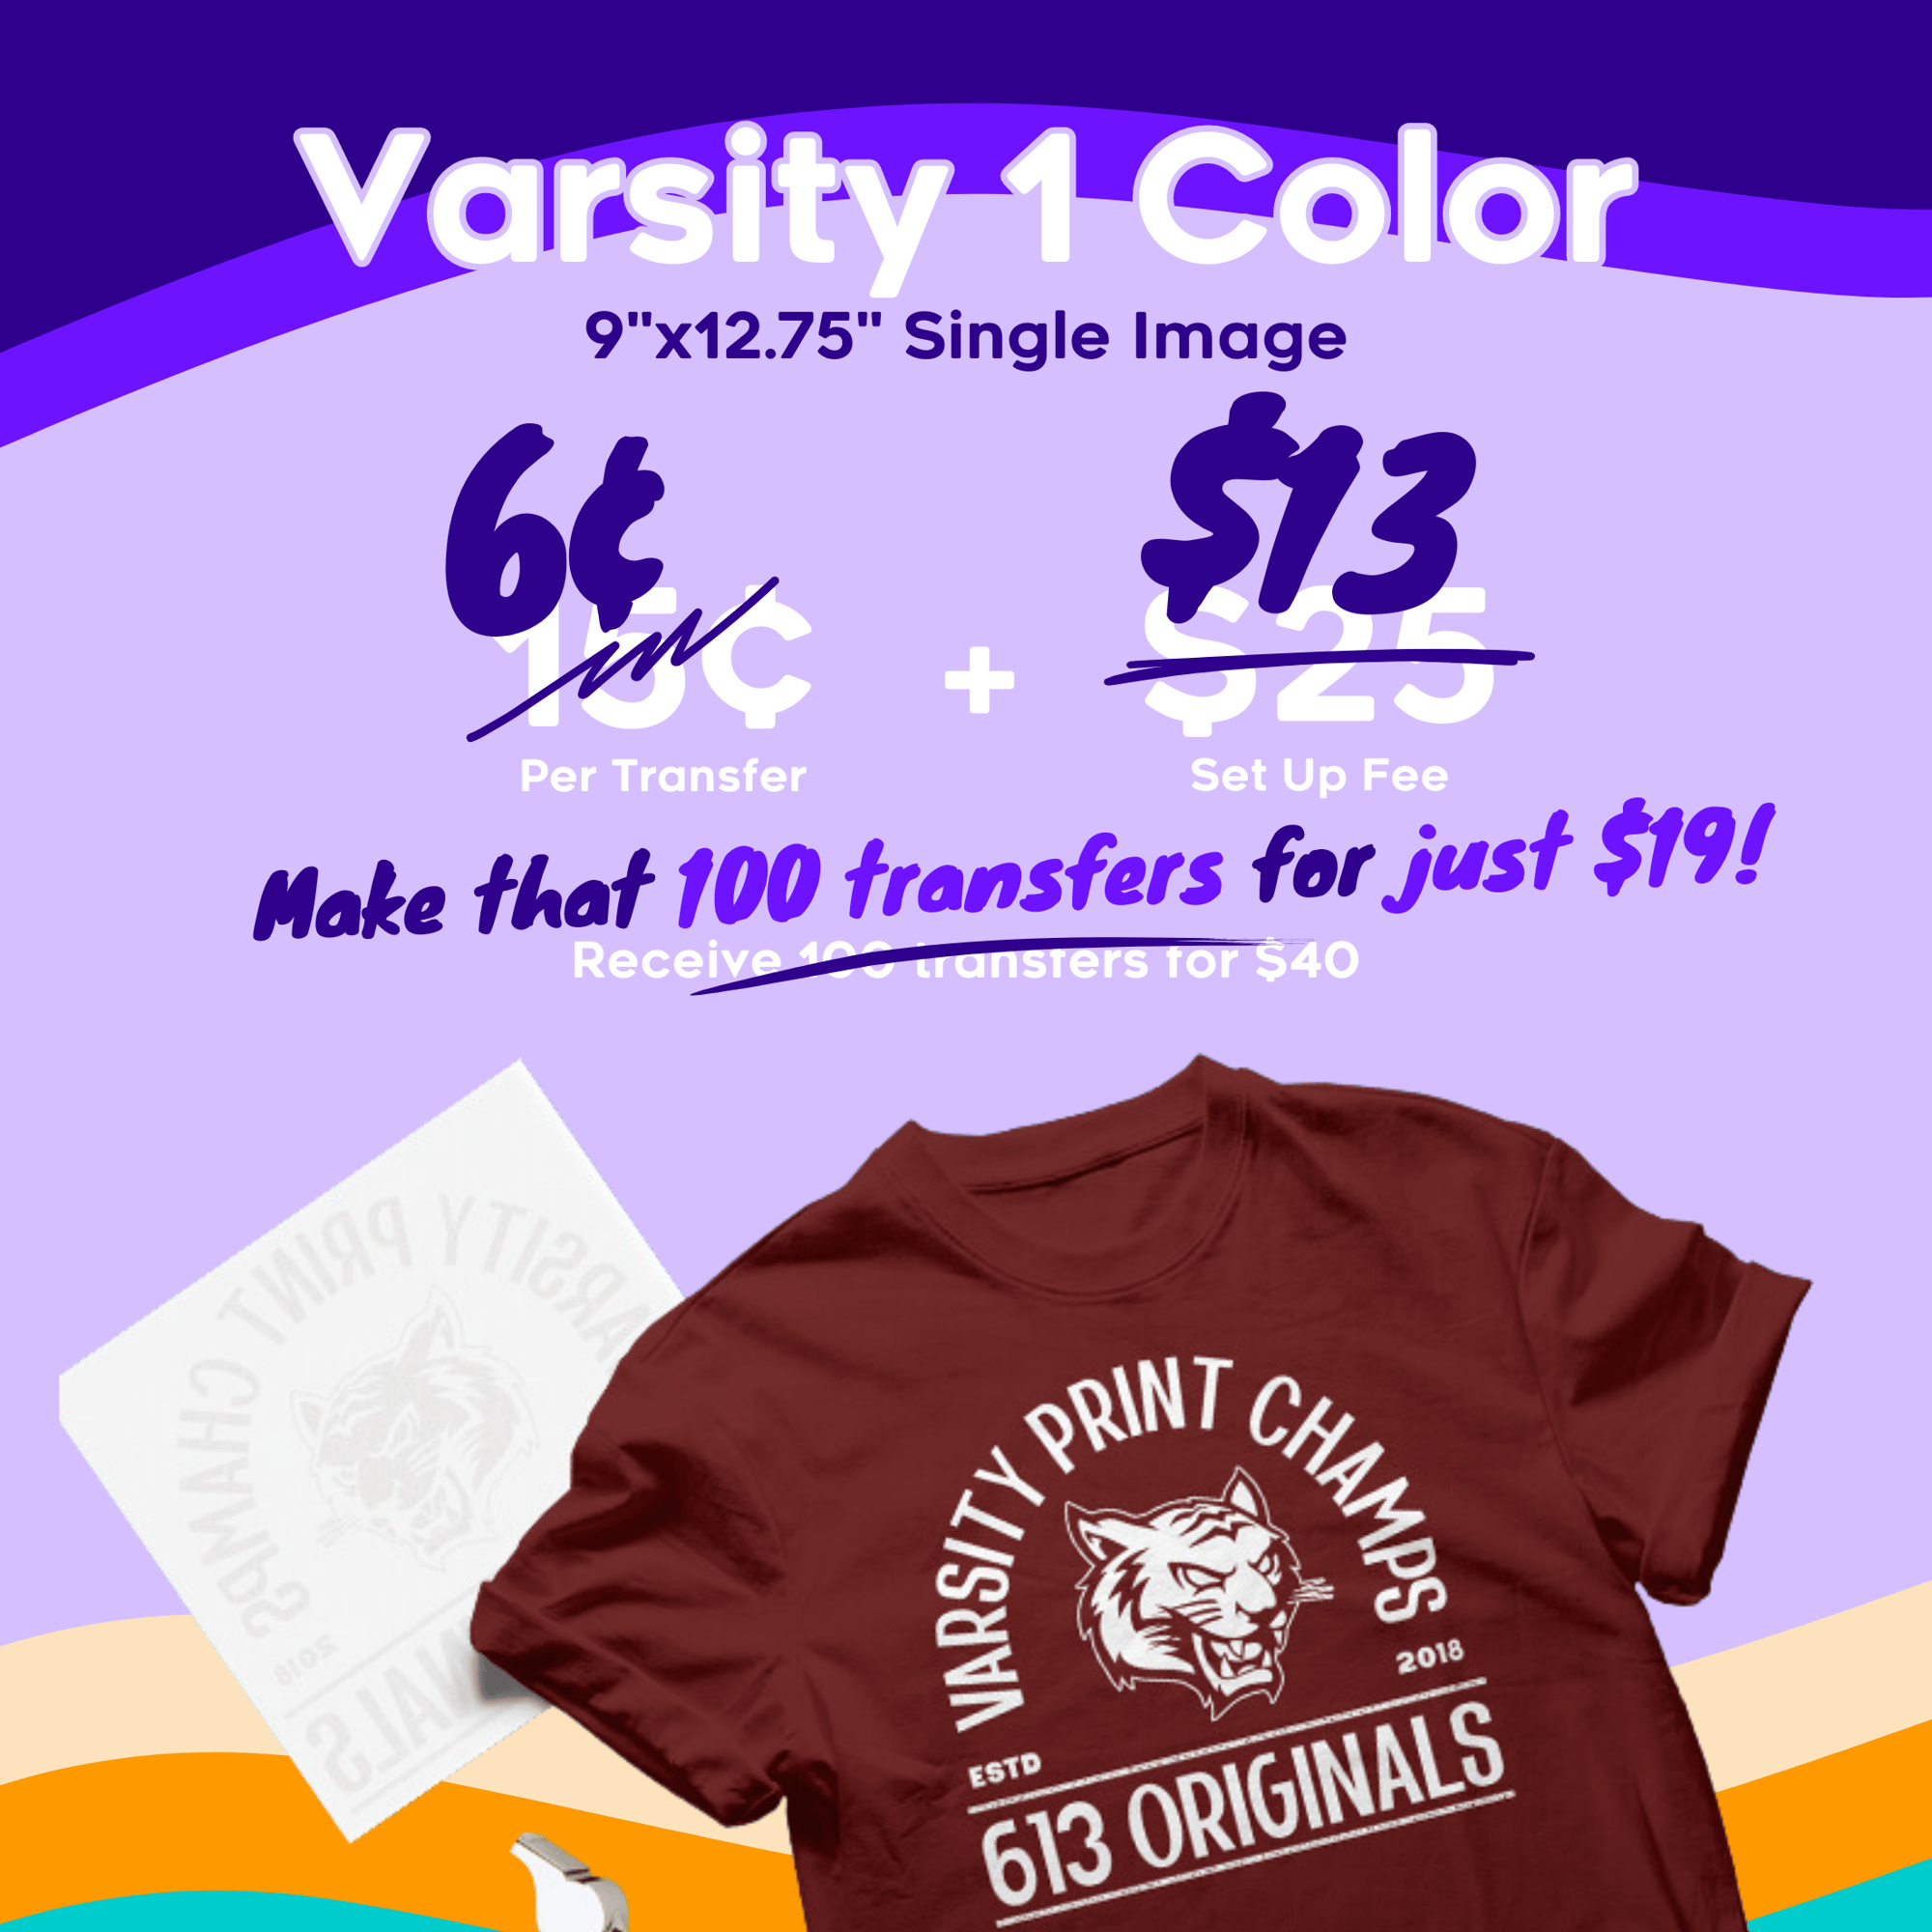 Varsity 1 Color Sale